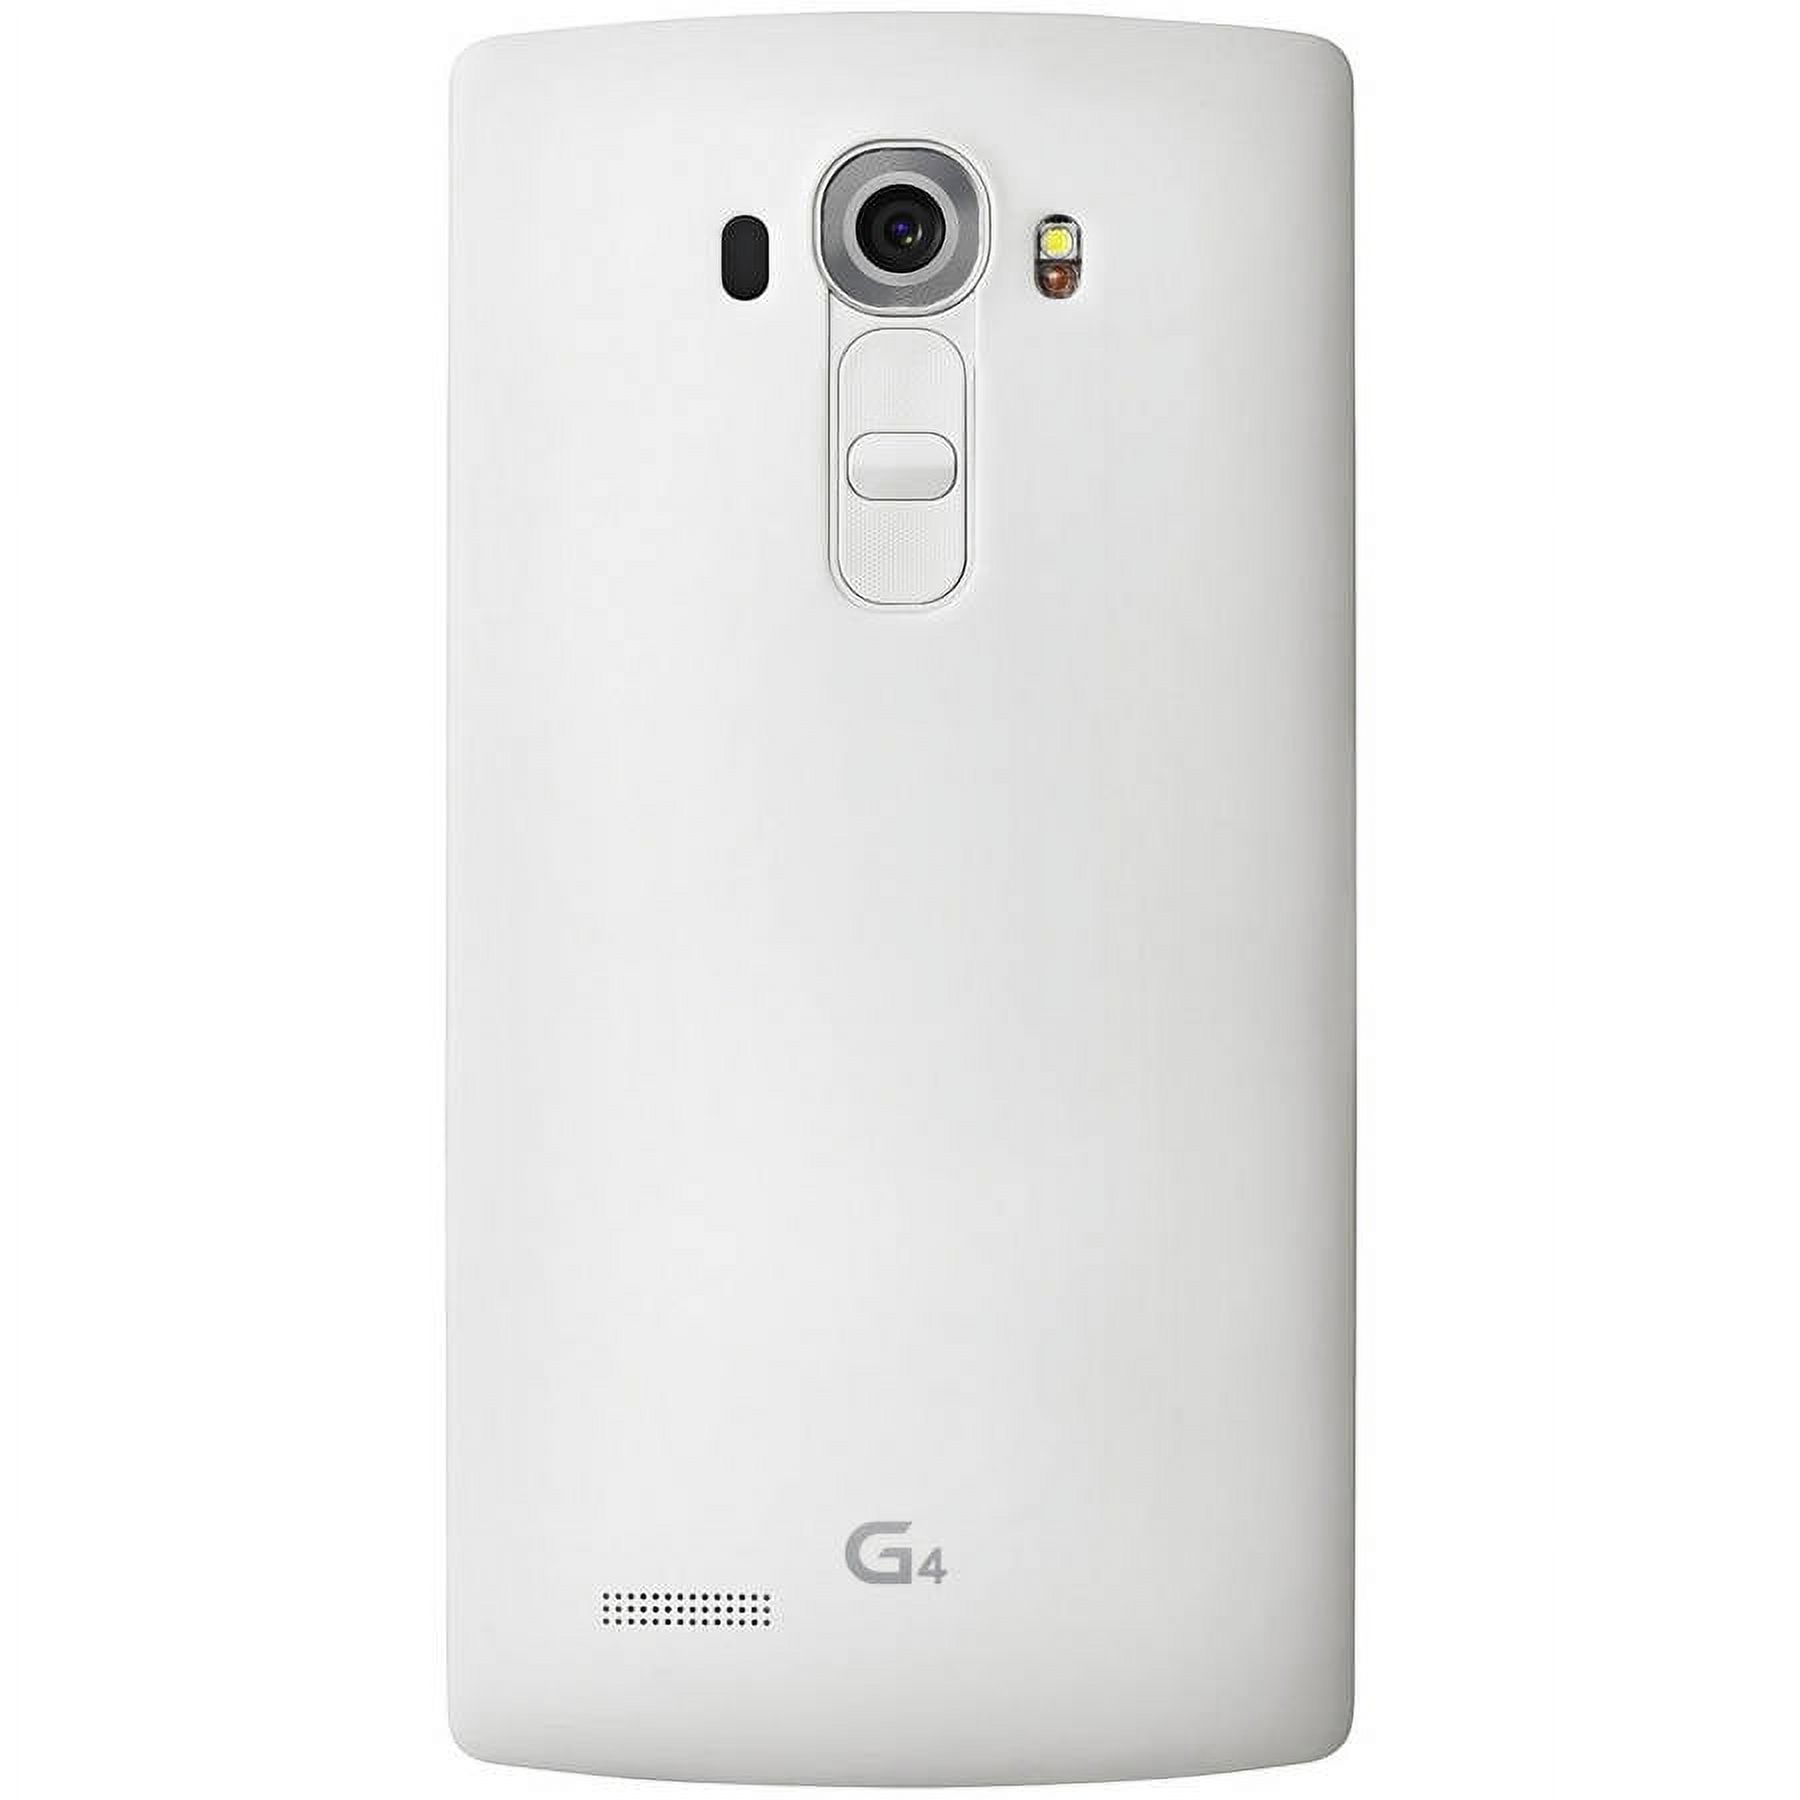 LG G4 H815 32GB GSM Smartphone (Unlocked), White/Gold - image 2 of 3